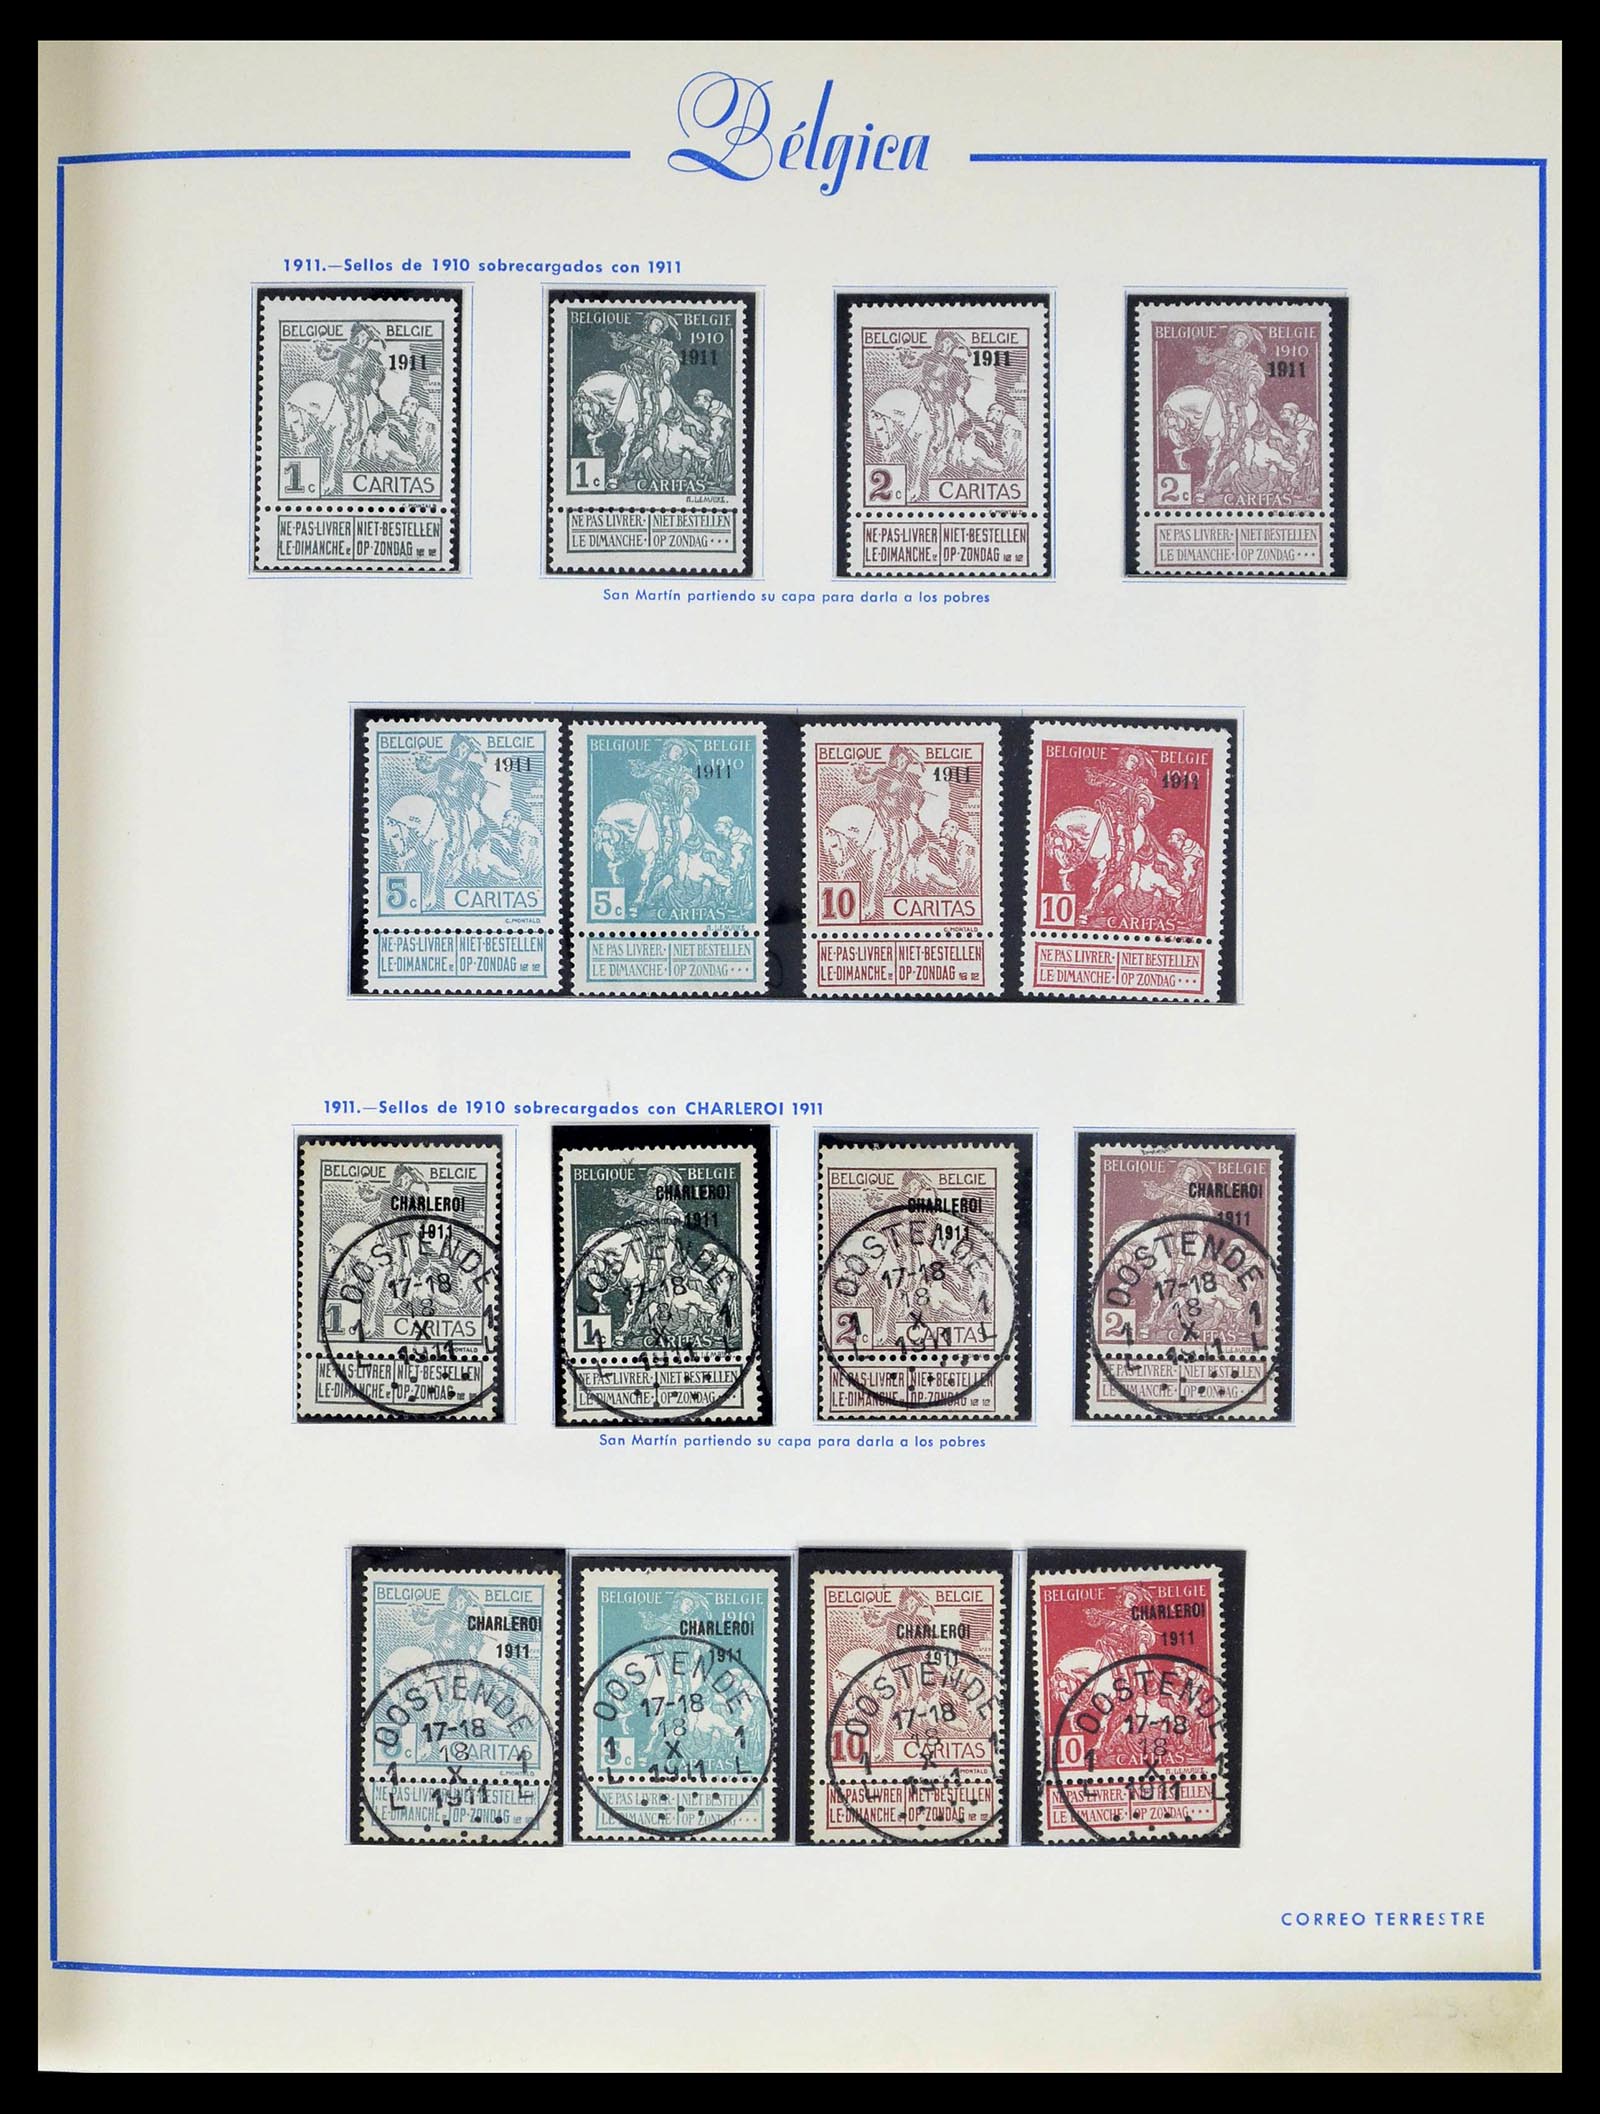 39230 0007 - Stamp collection 39230 Belgium 1849-1976.